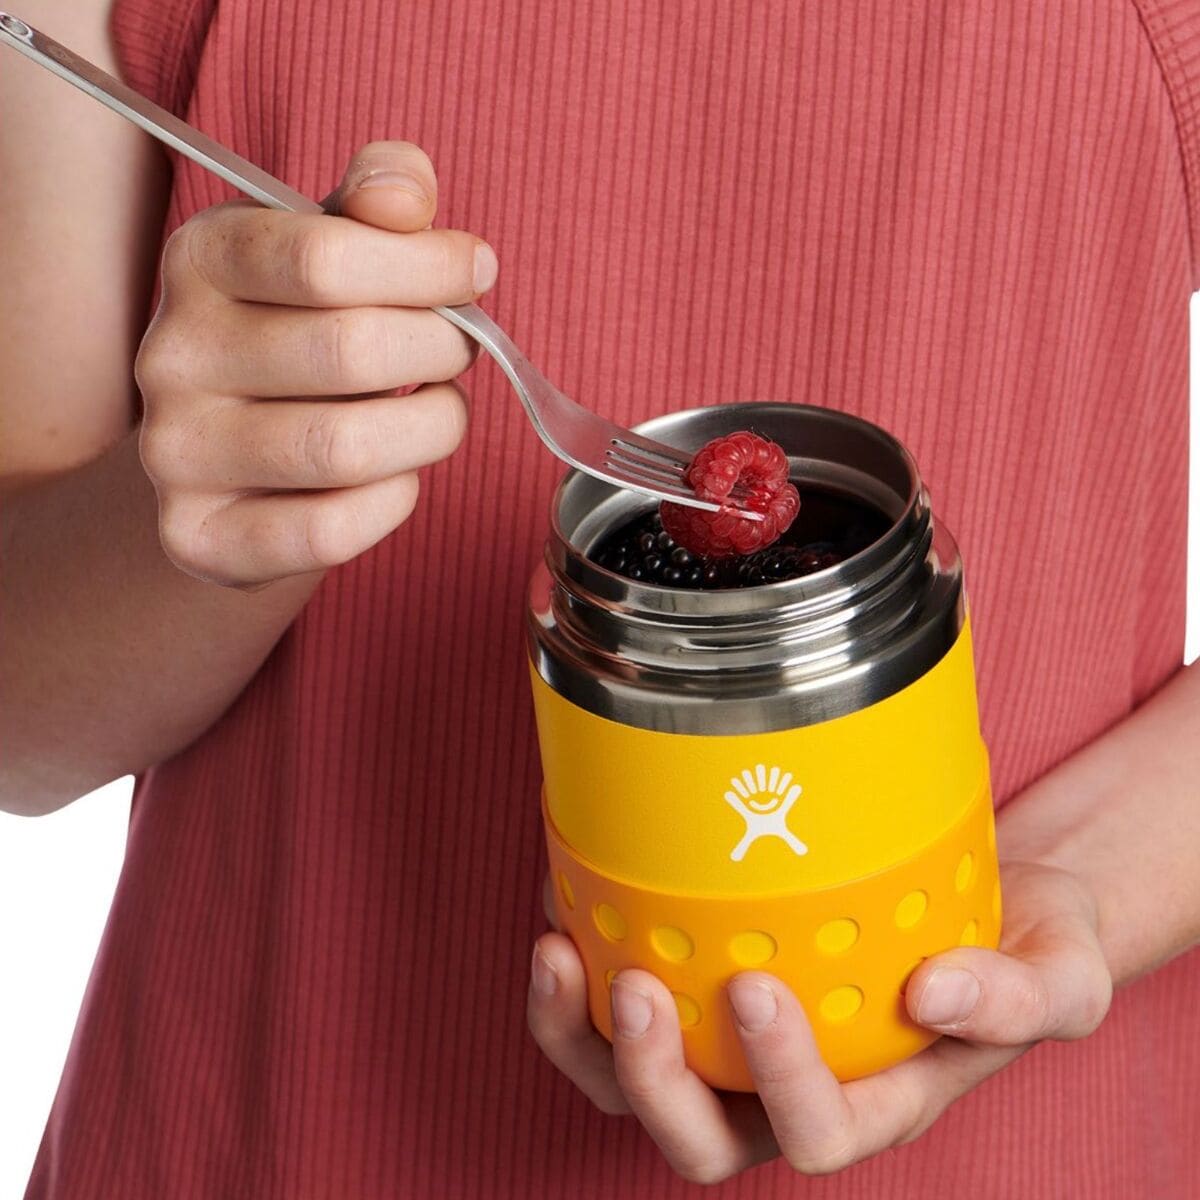 Hydro Flask 12 oz Kids Insulated Food Jar Peony